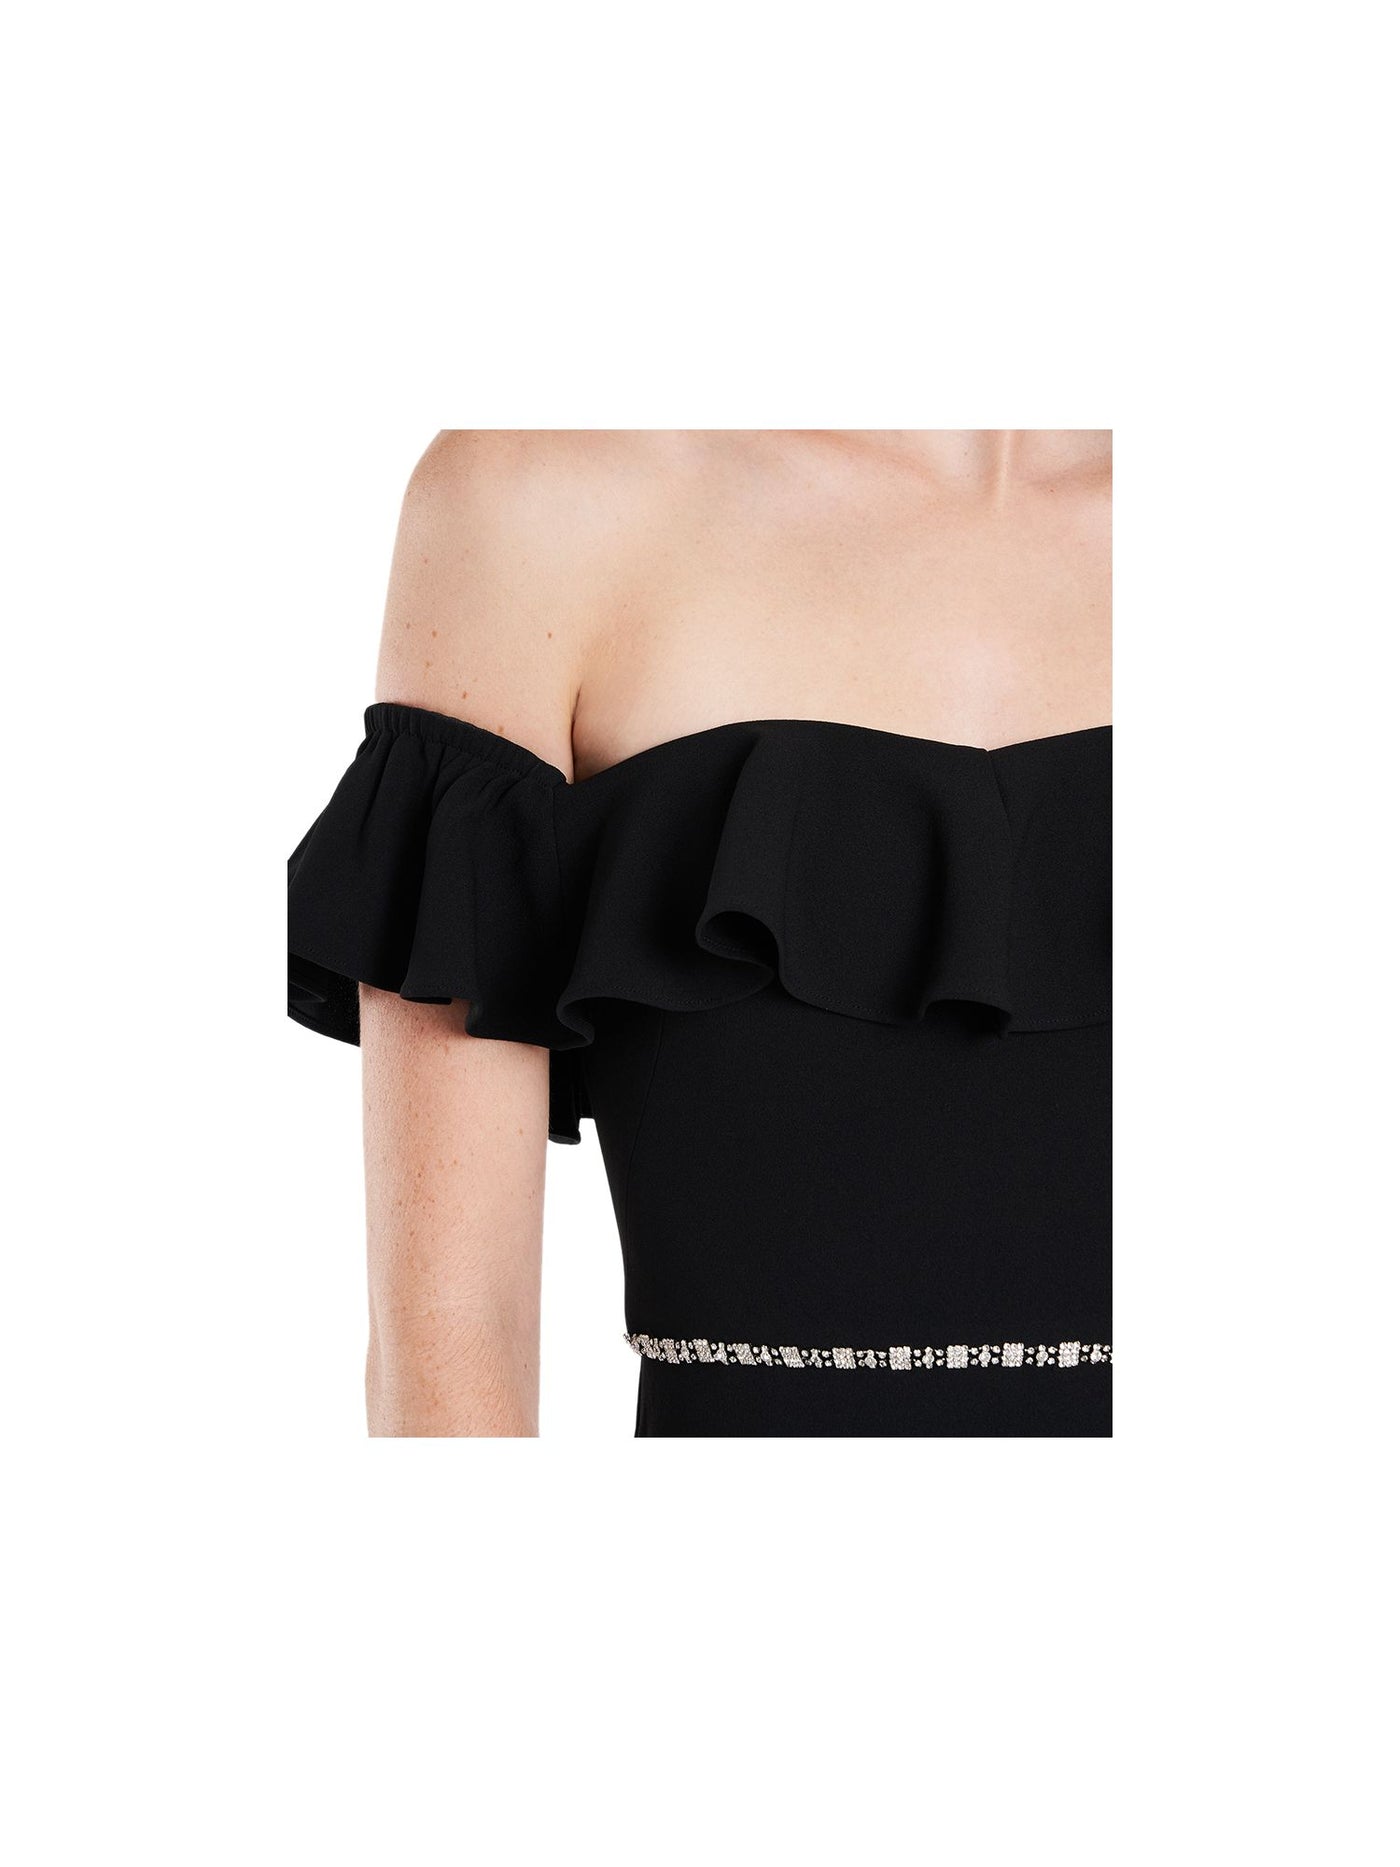 MSK Womens Black Ruffled Embellished Sleeveless Off Shoulder Maxi Formal A-Line Dress 6